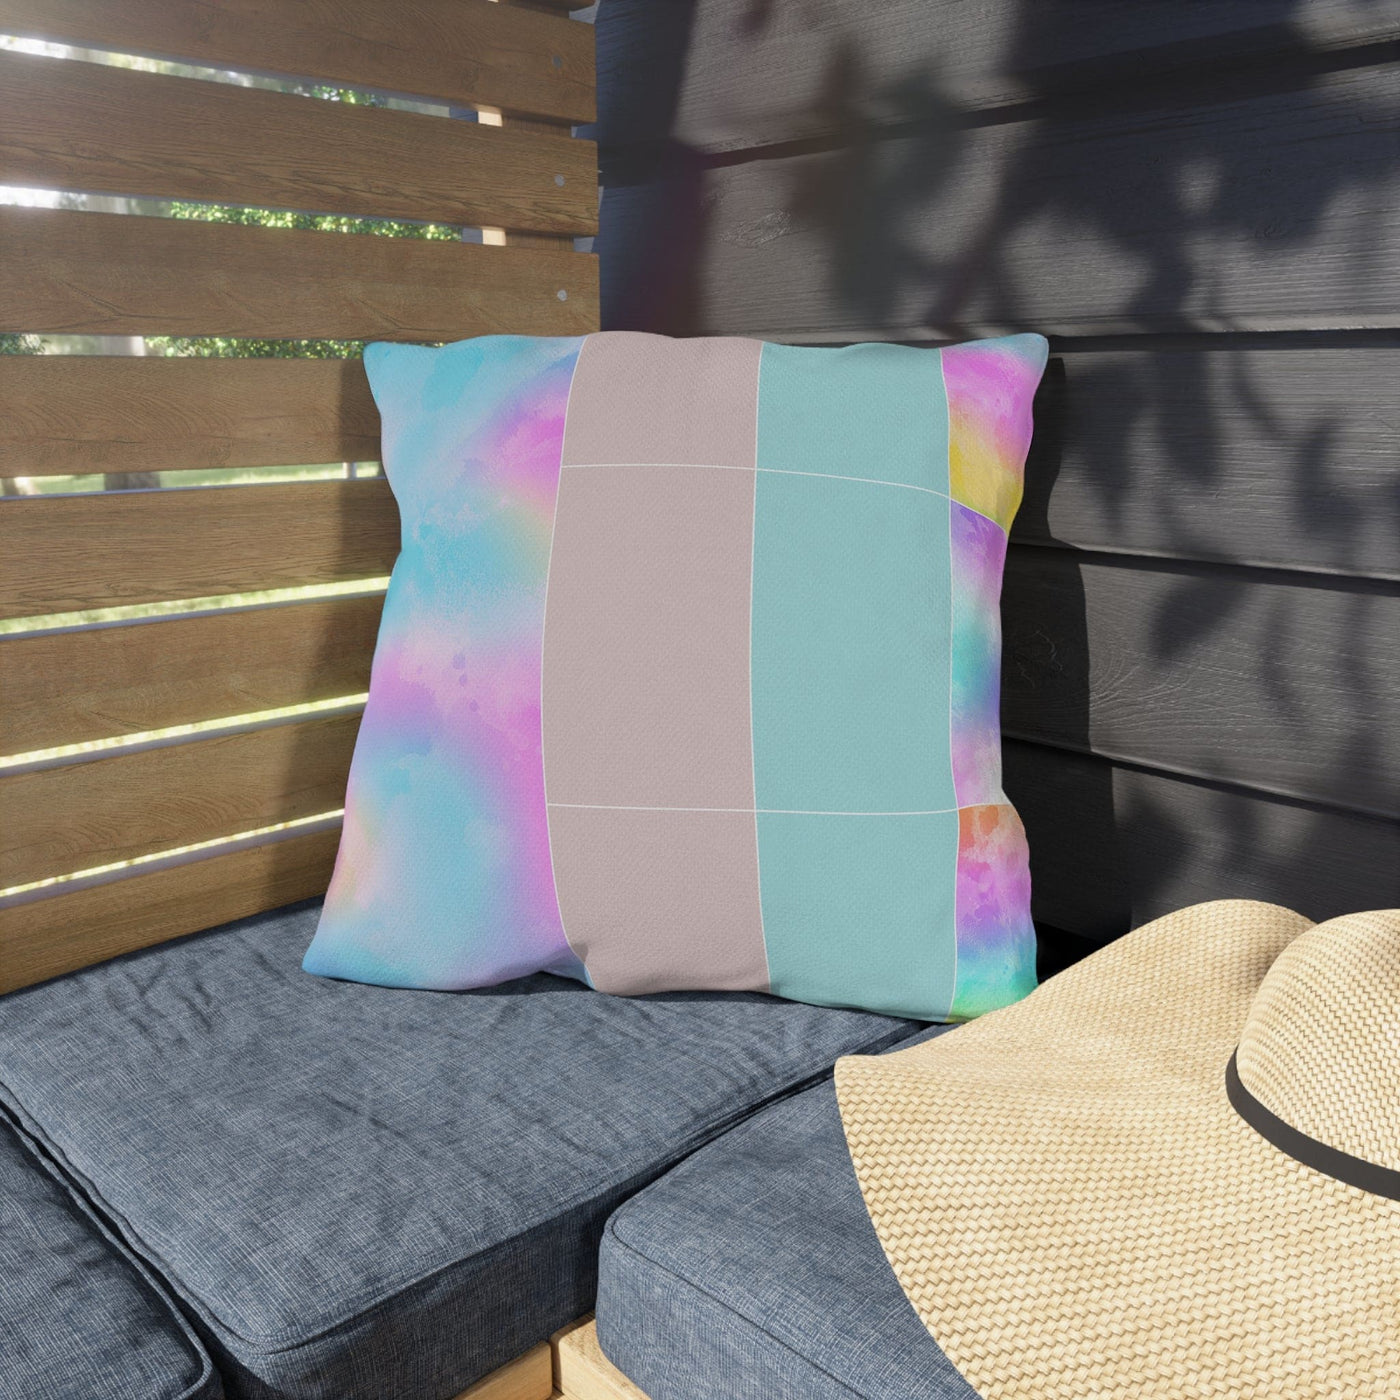 Decorative Outdoor Pillows - Set Of 2 Pastel Colorblock Watercolor Illustration